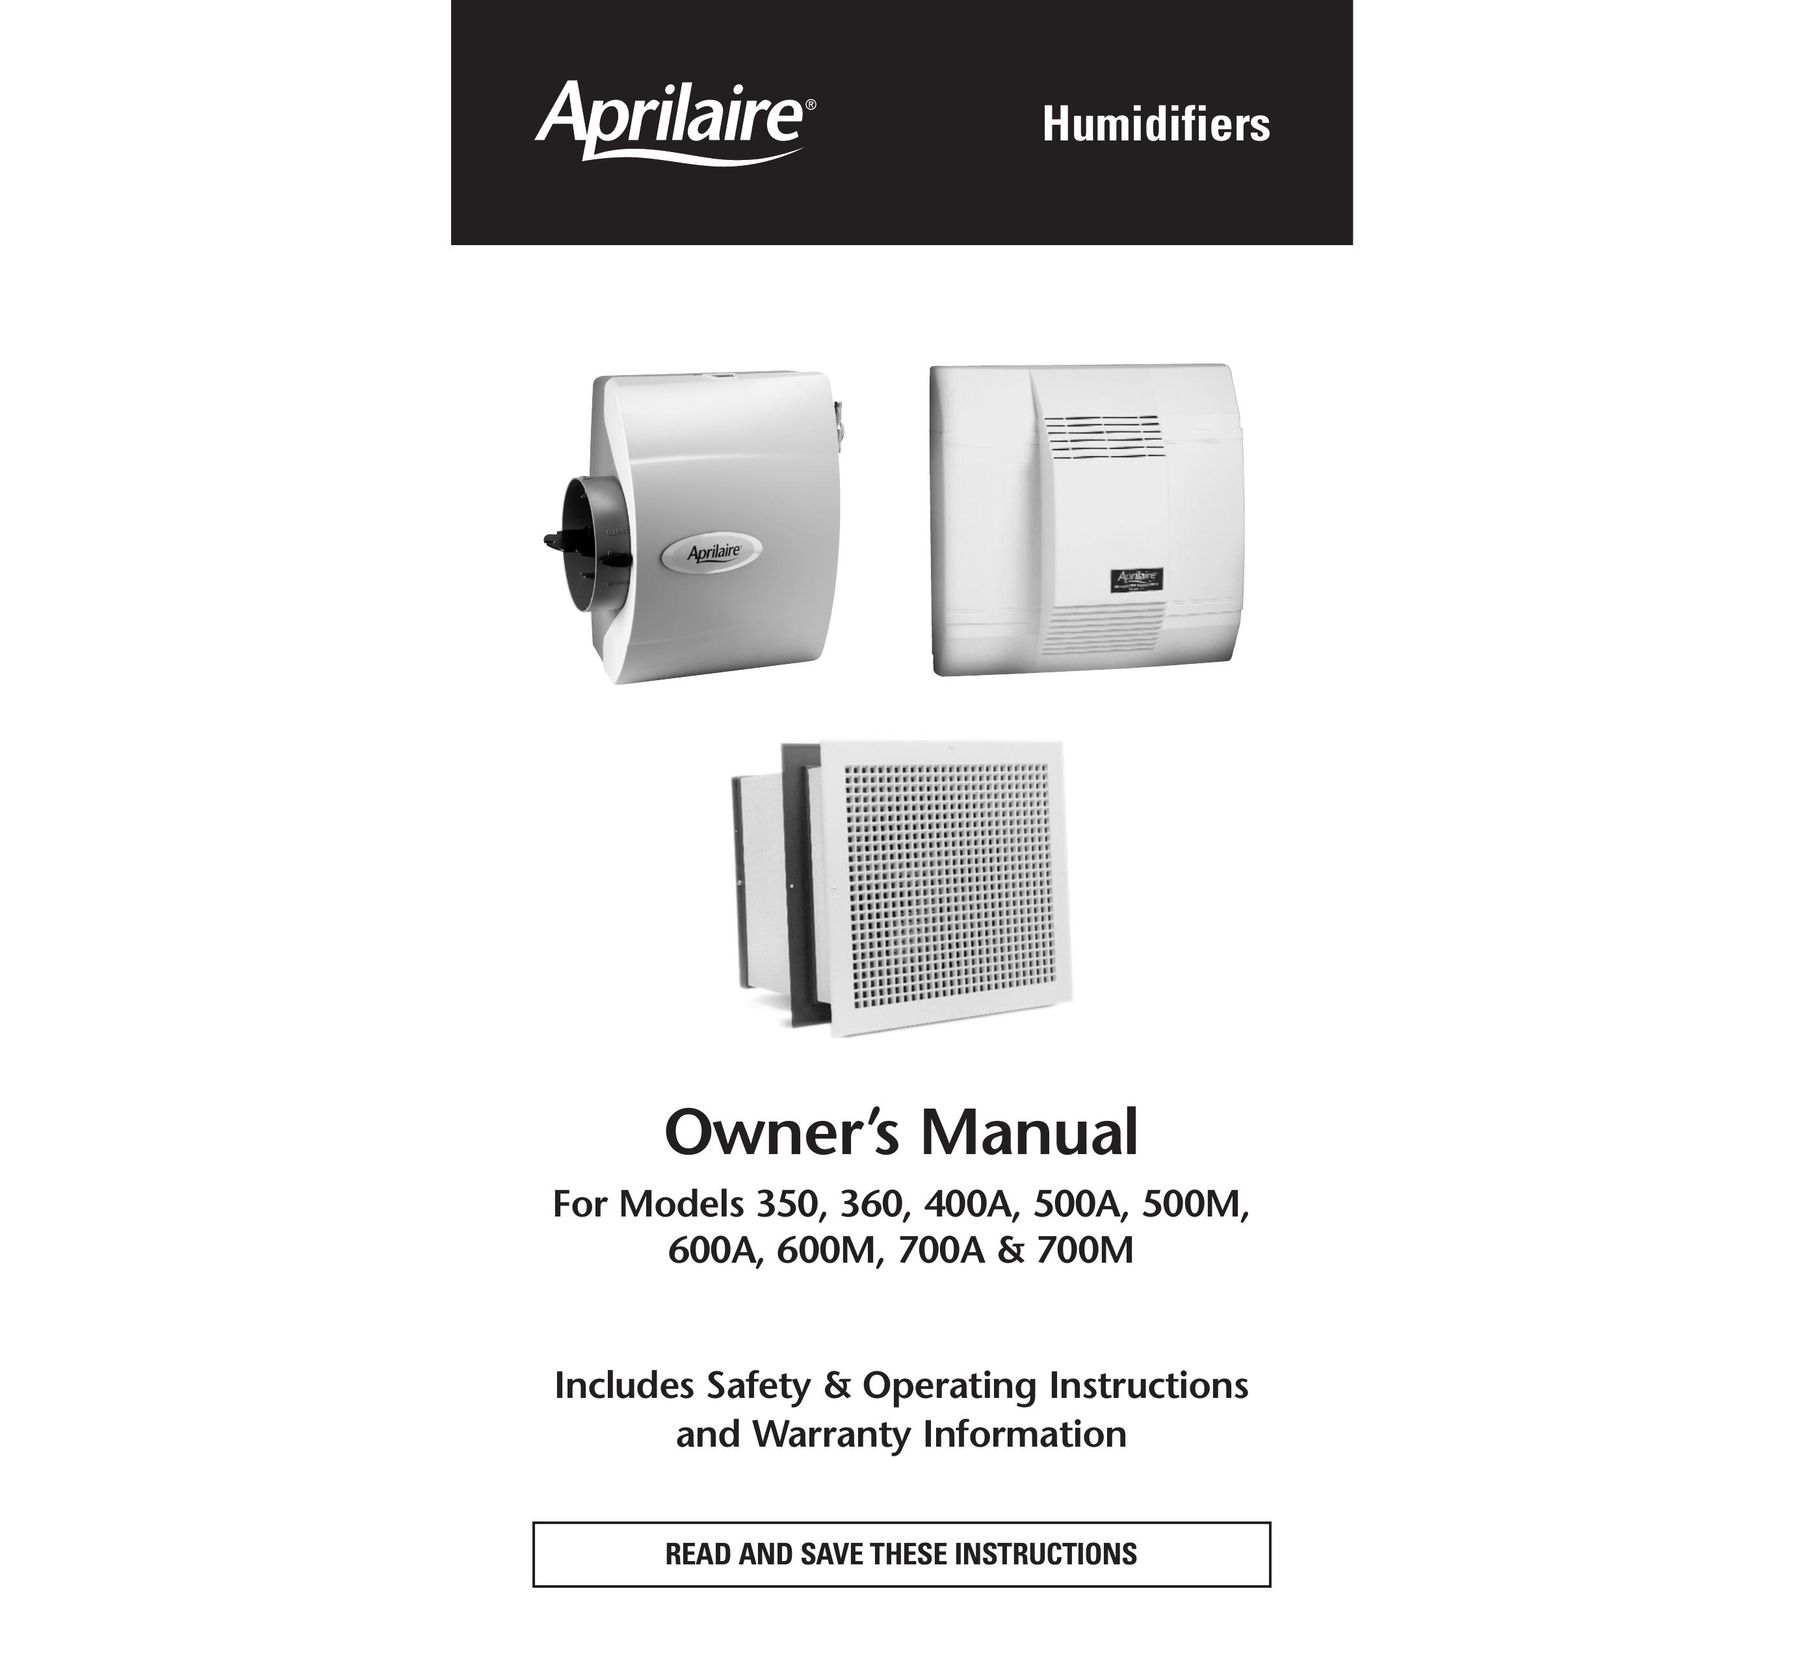 Aprilaire 700M Dehumidifier User Manual